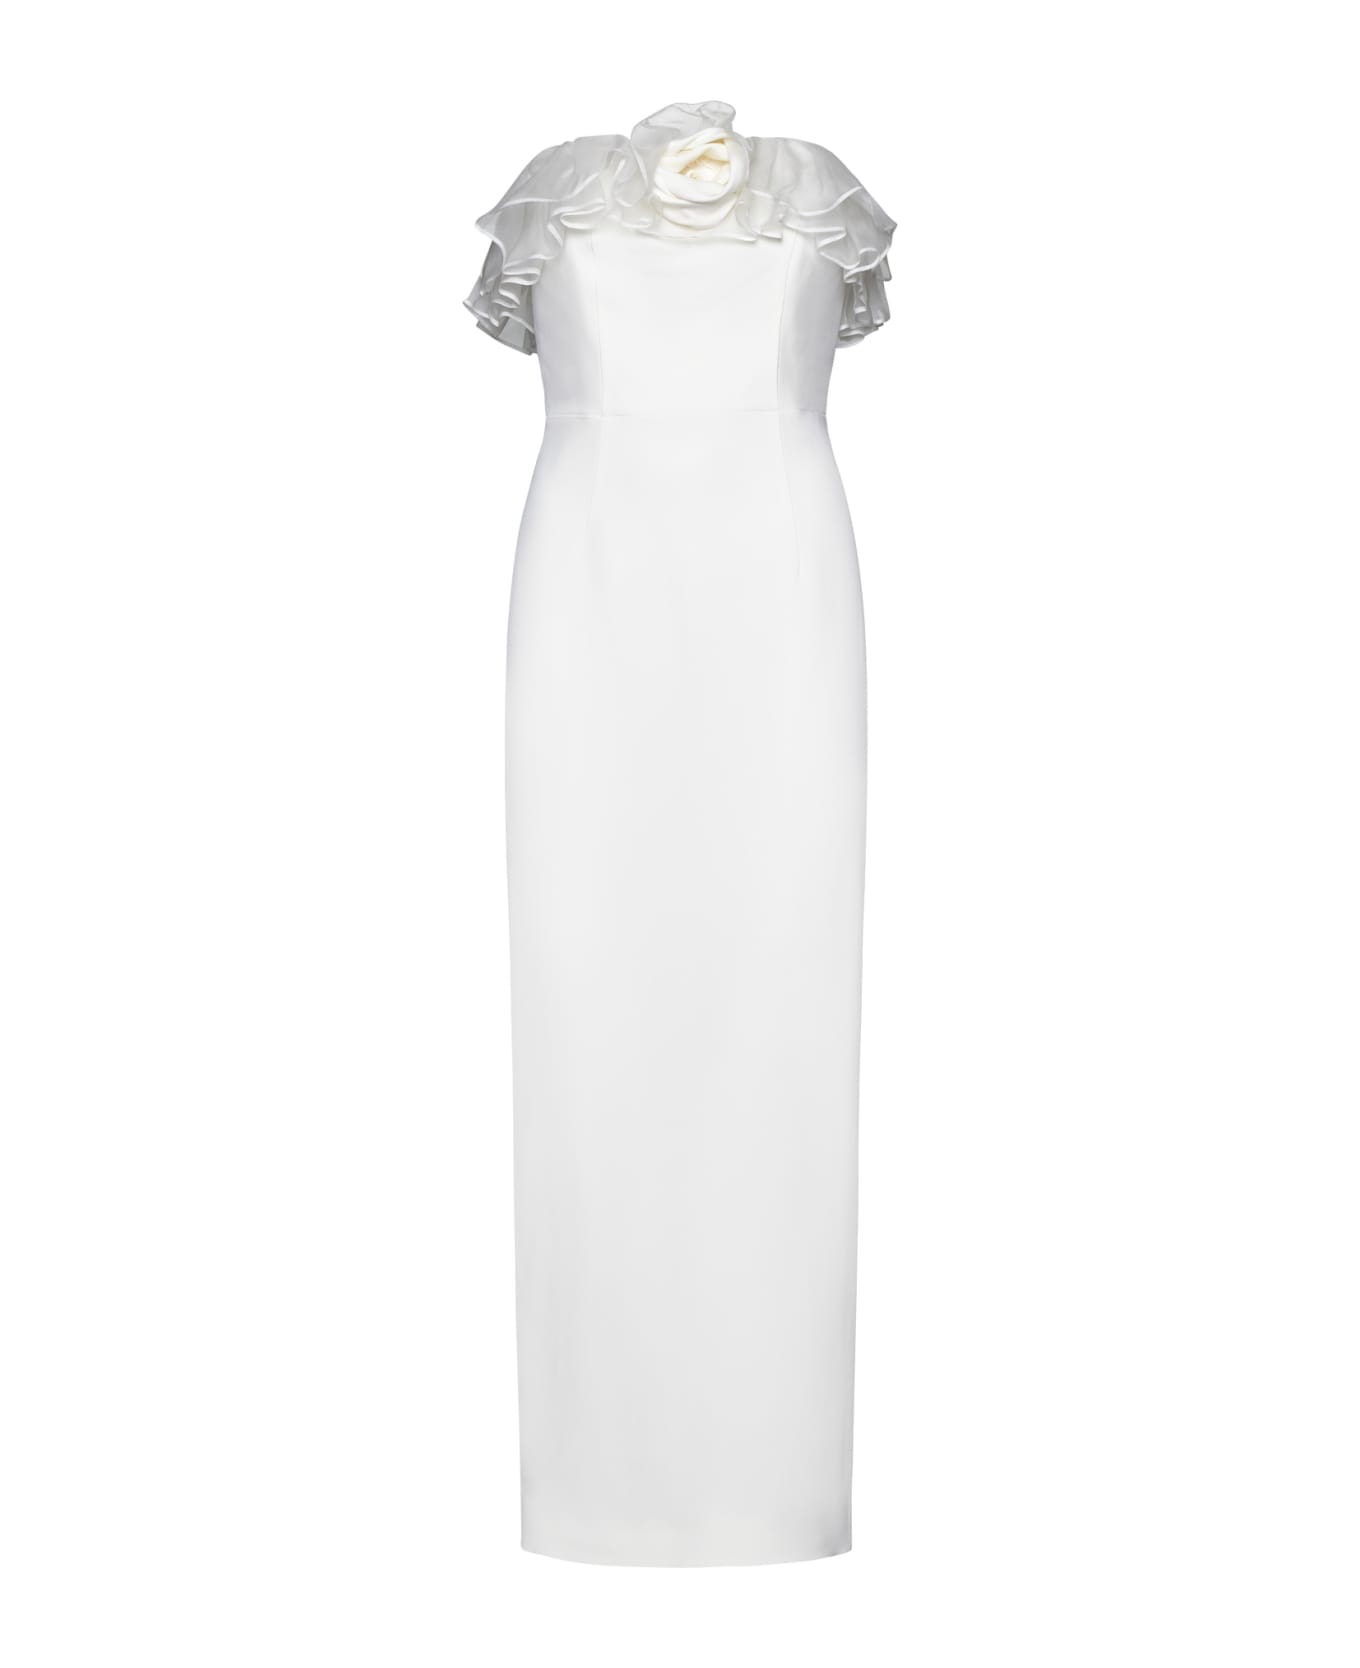 Alessandra Rich Dress - White